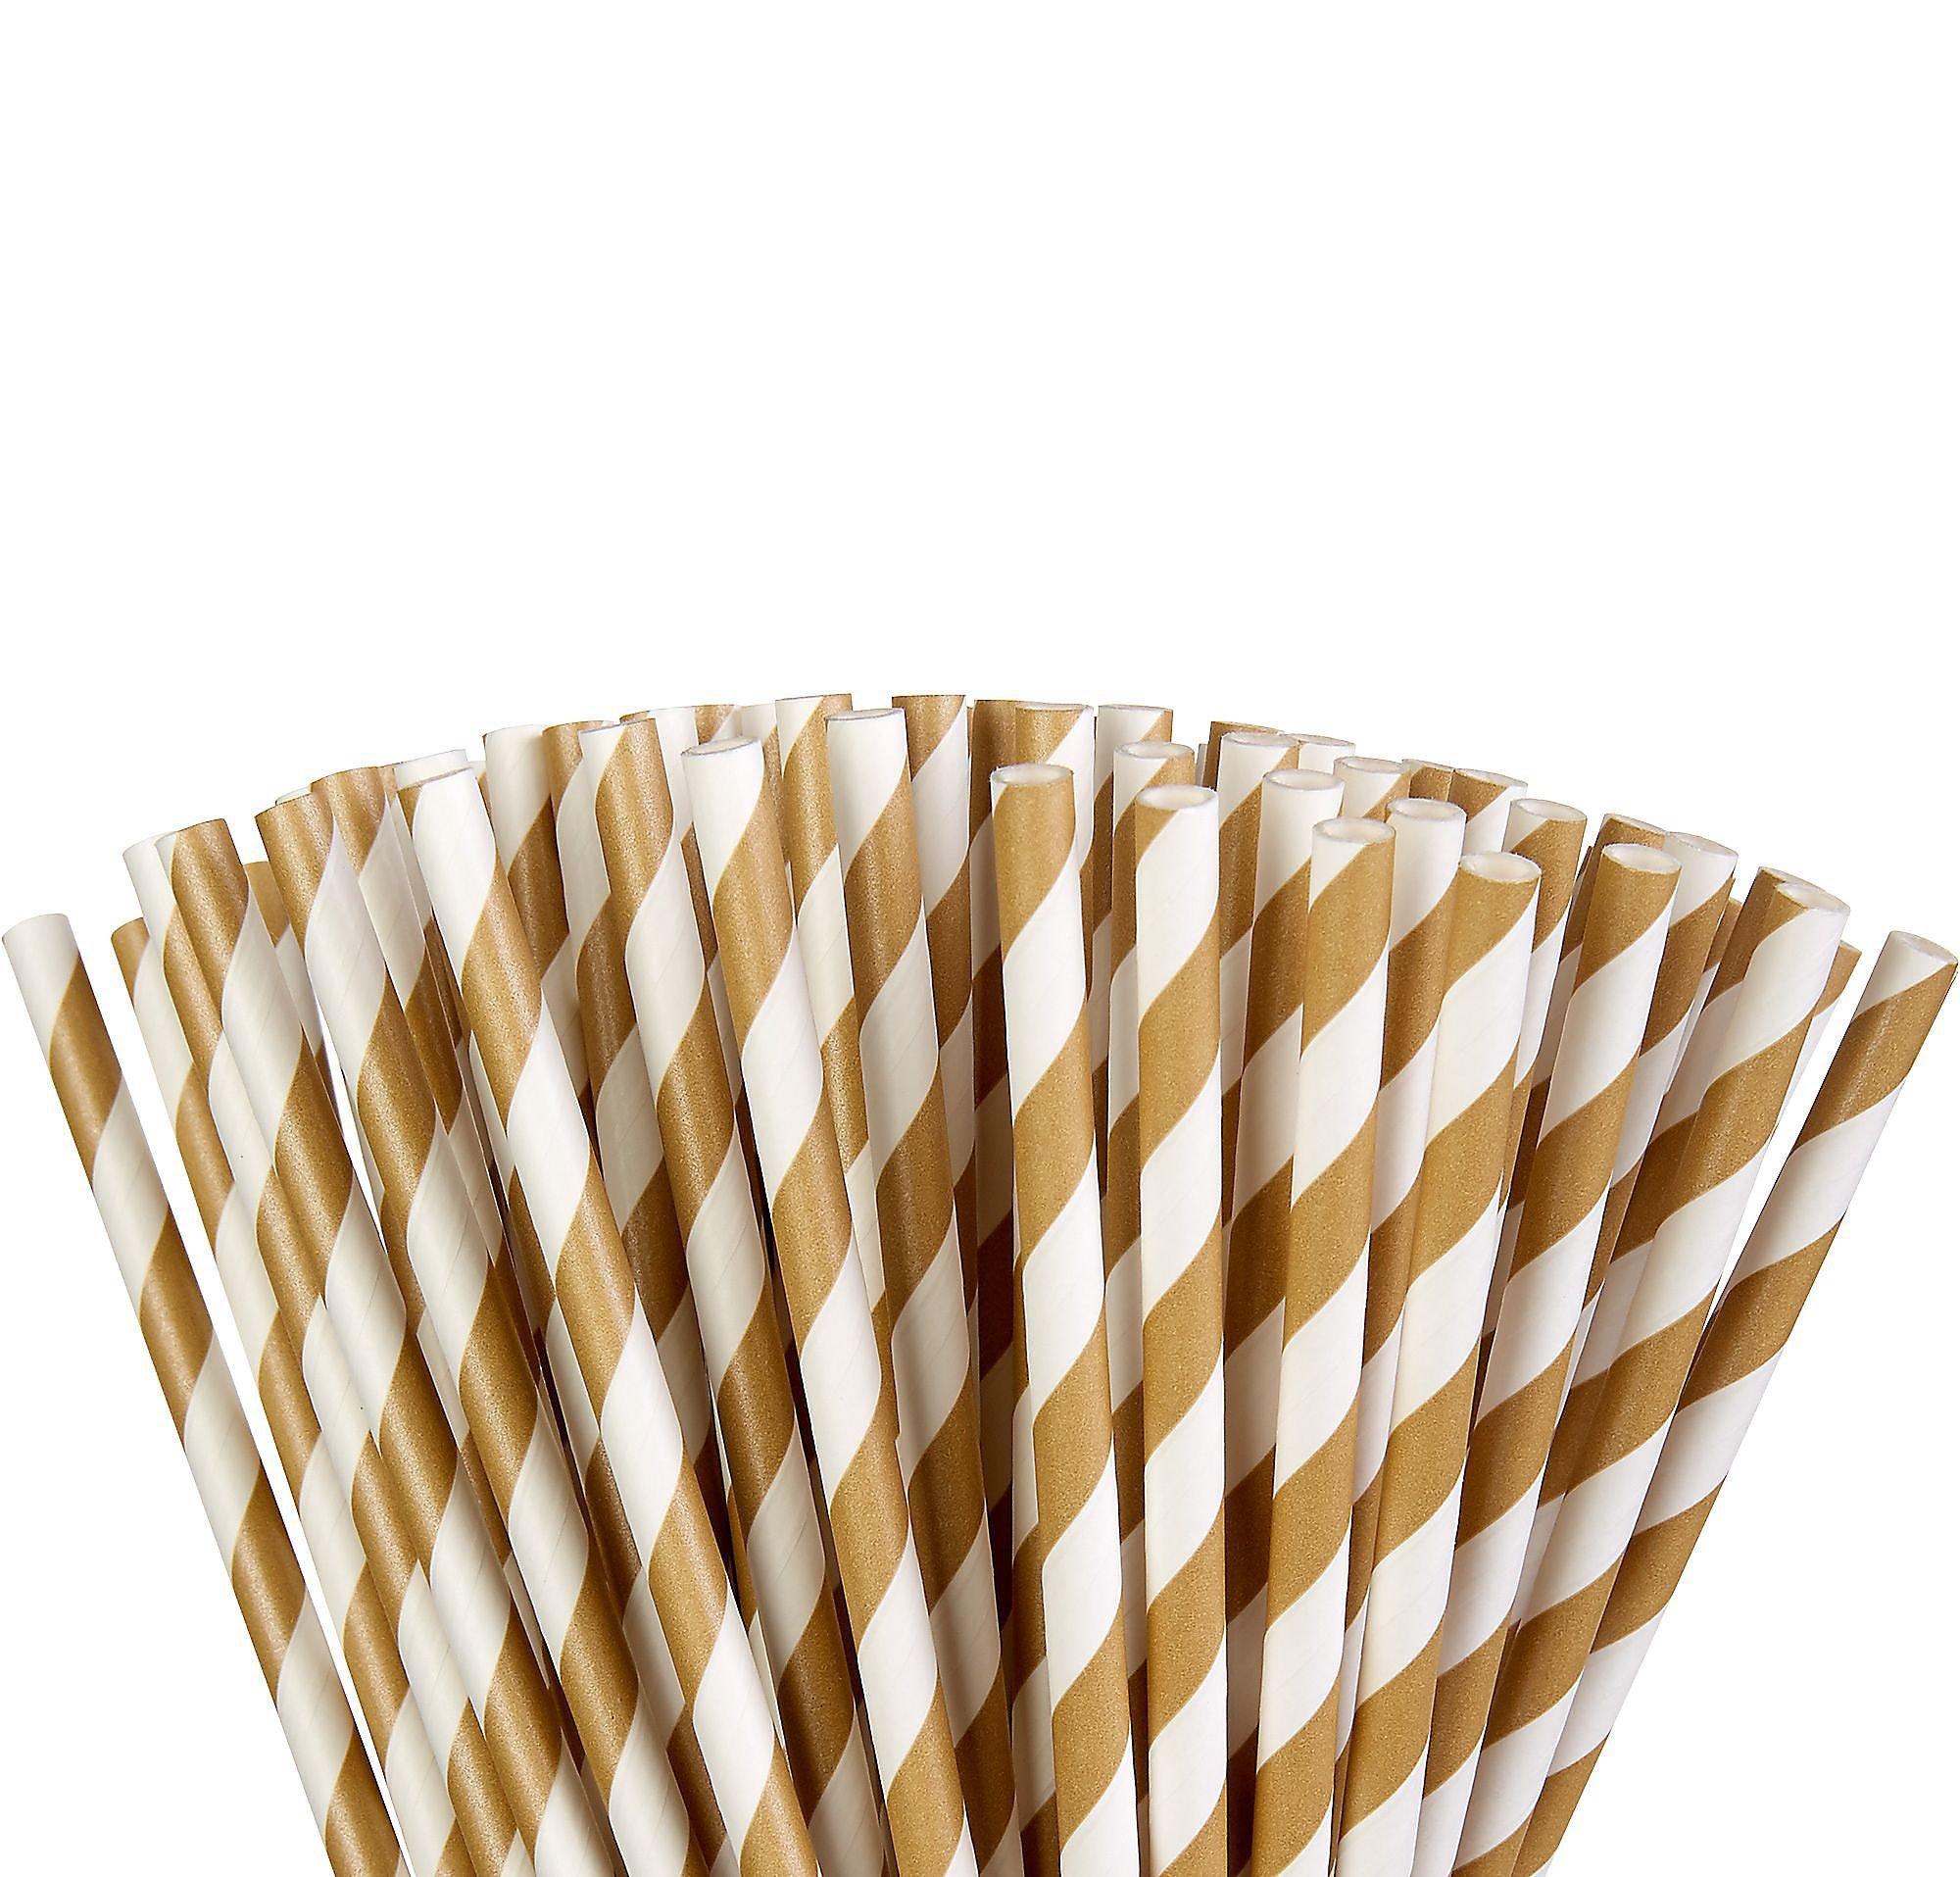 Striped Paper Straws, 7.75in, 50ct